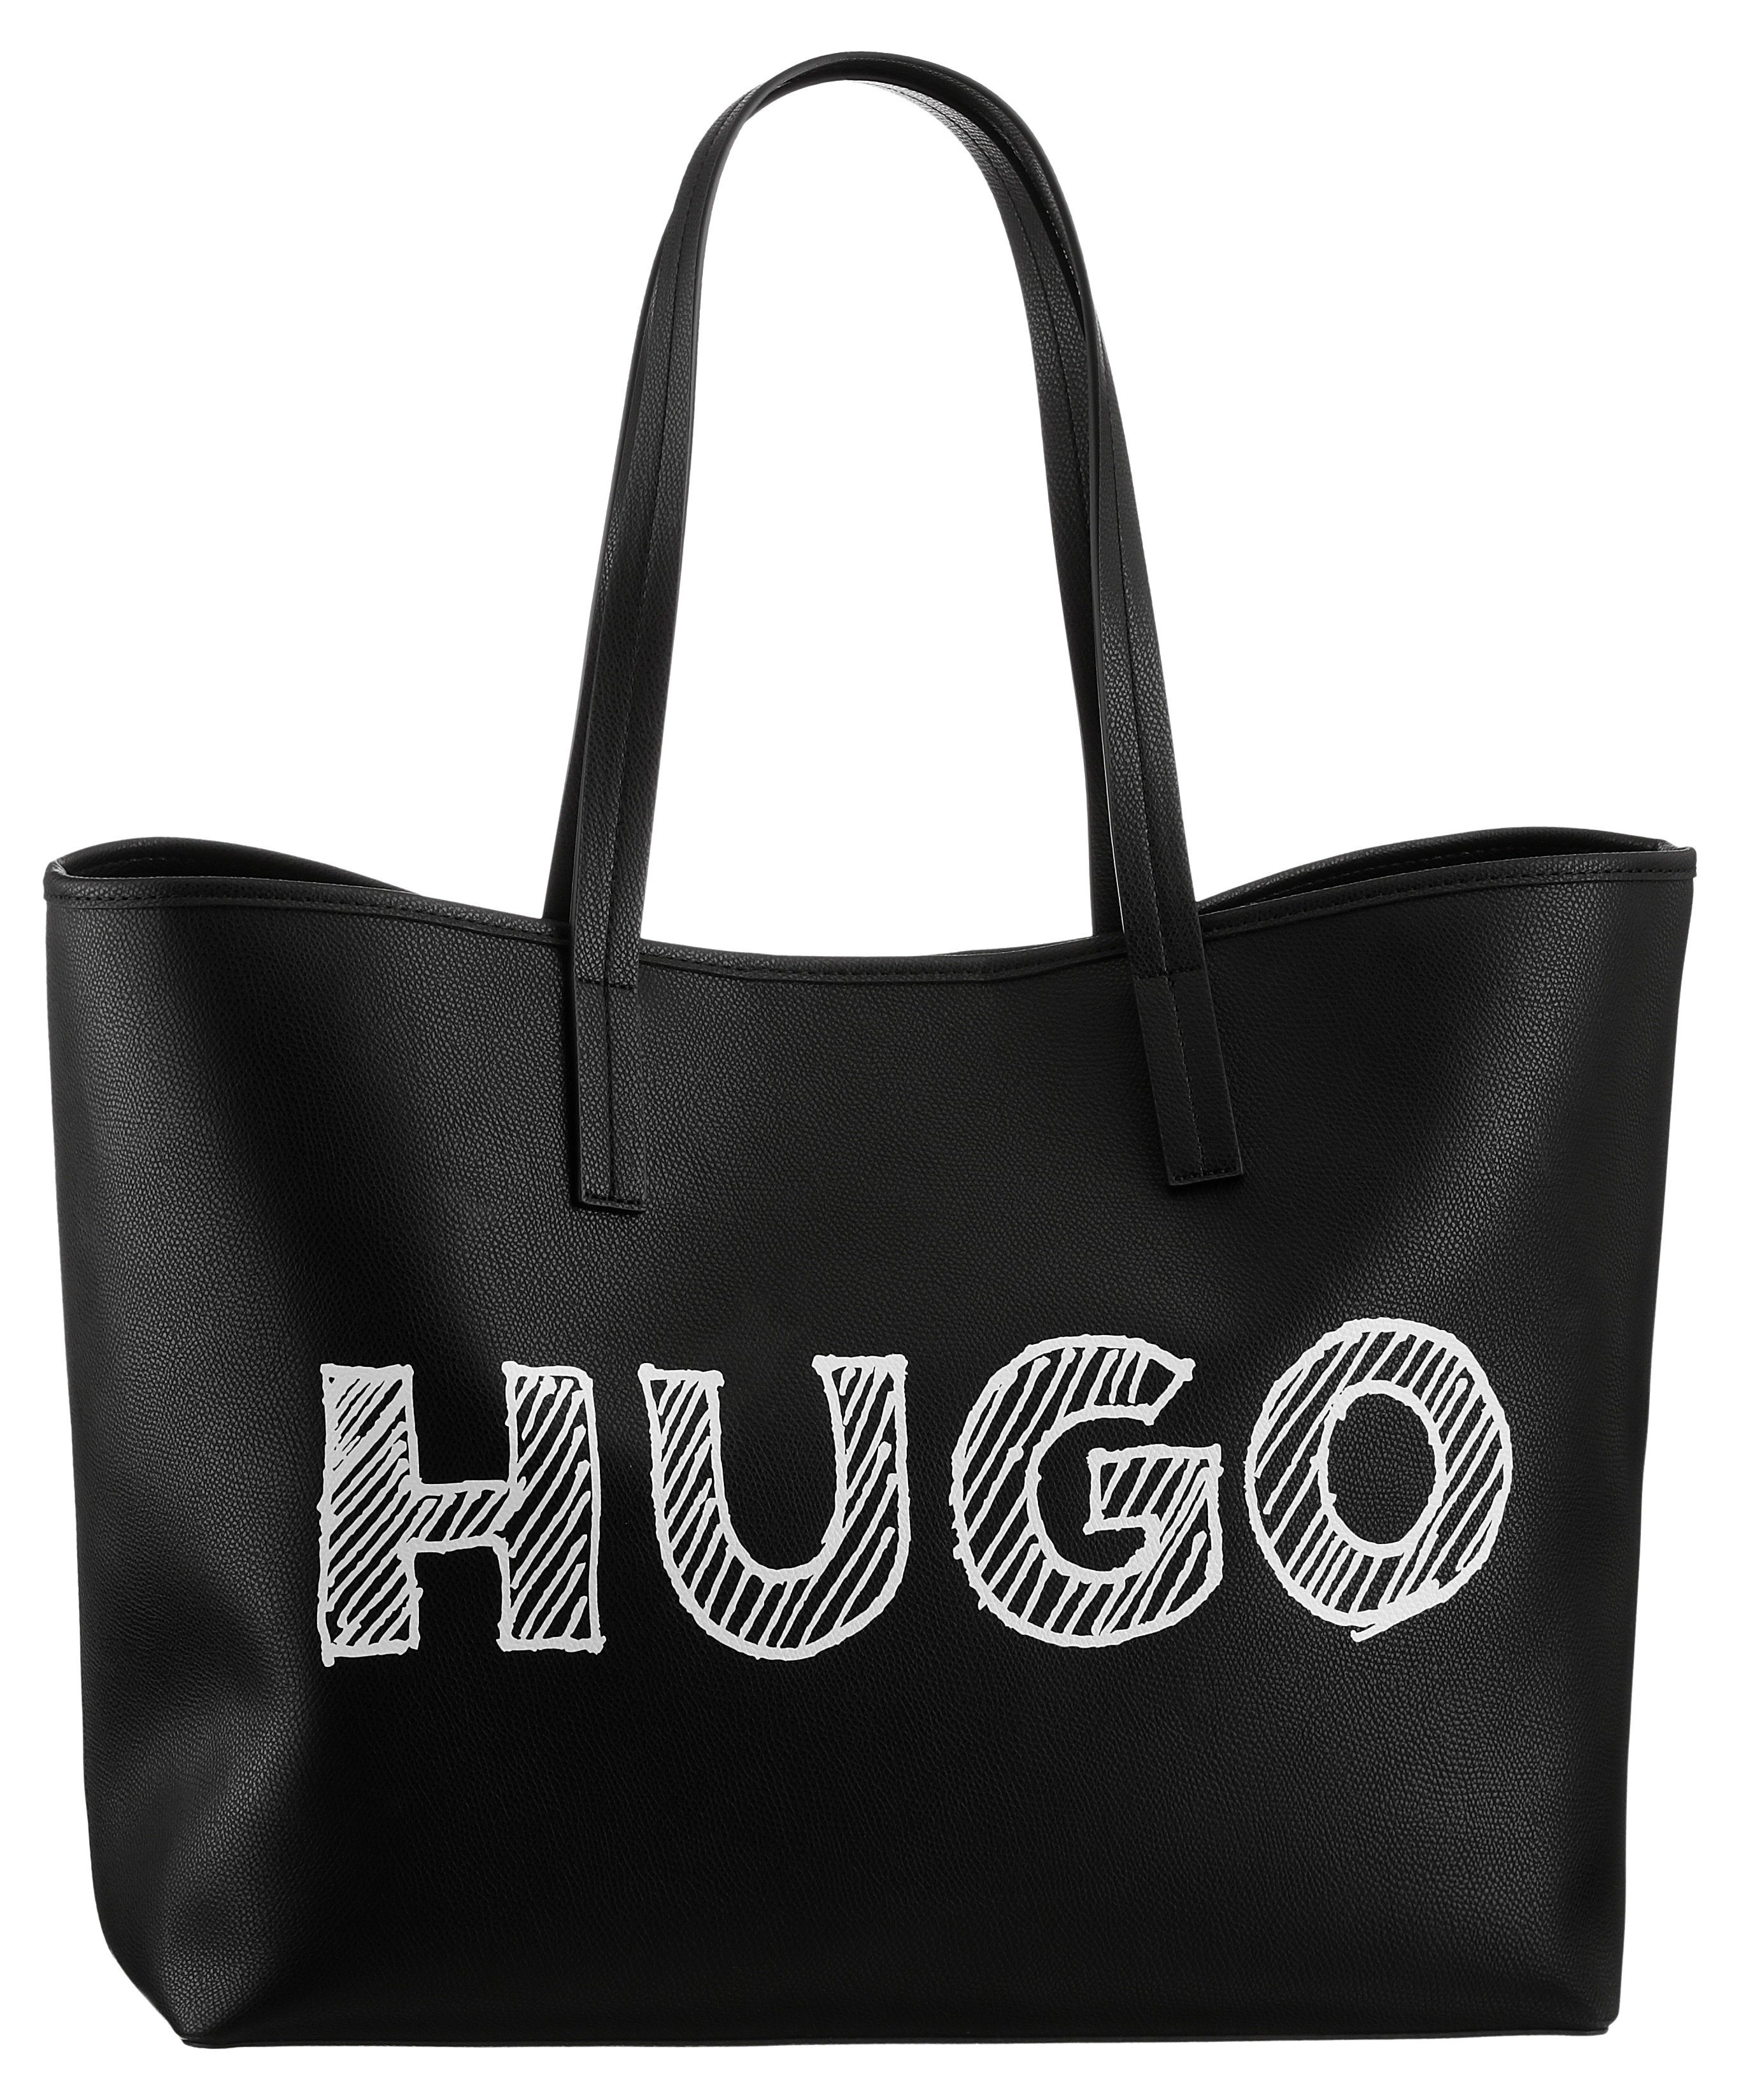 Chris herausnehmarer Shopper mit HUGO Shopper-G, Reißverschluss-Tasche